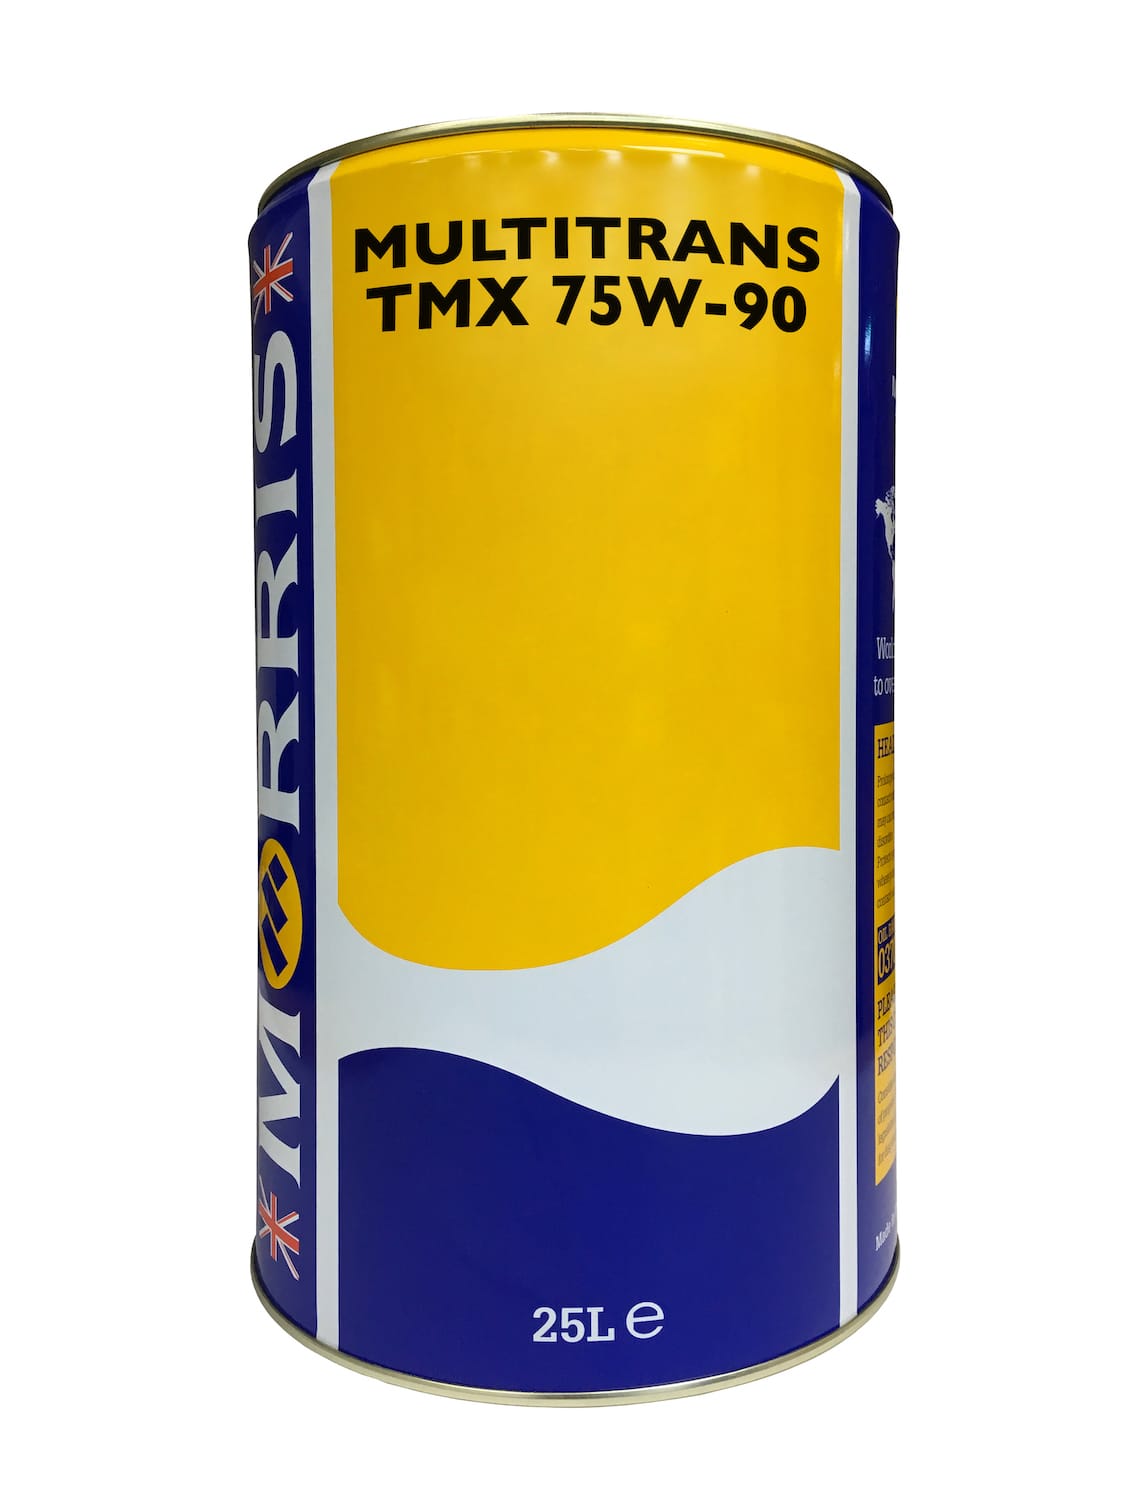 Multitrans TMX 75W-90